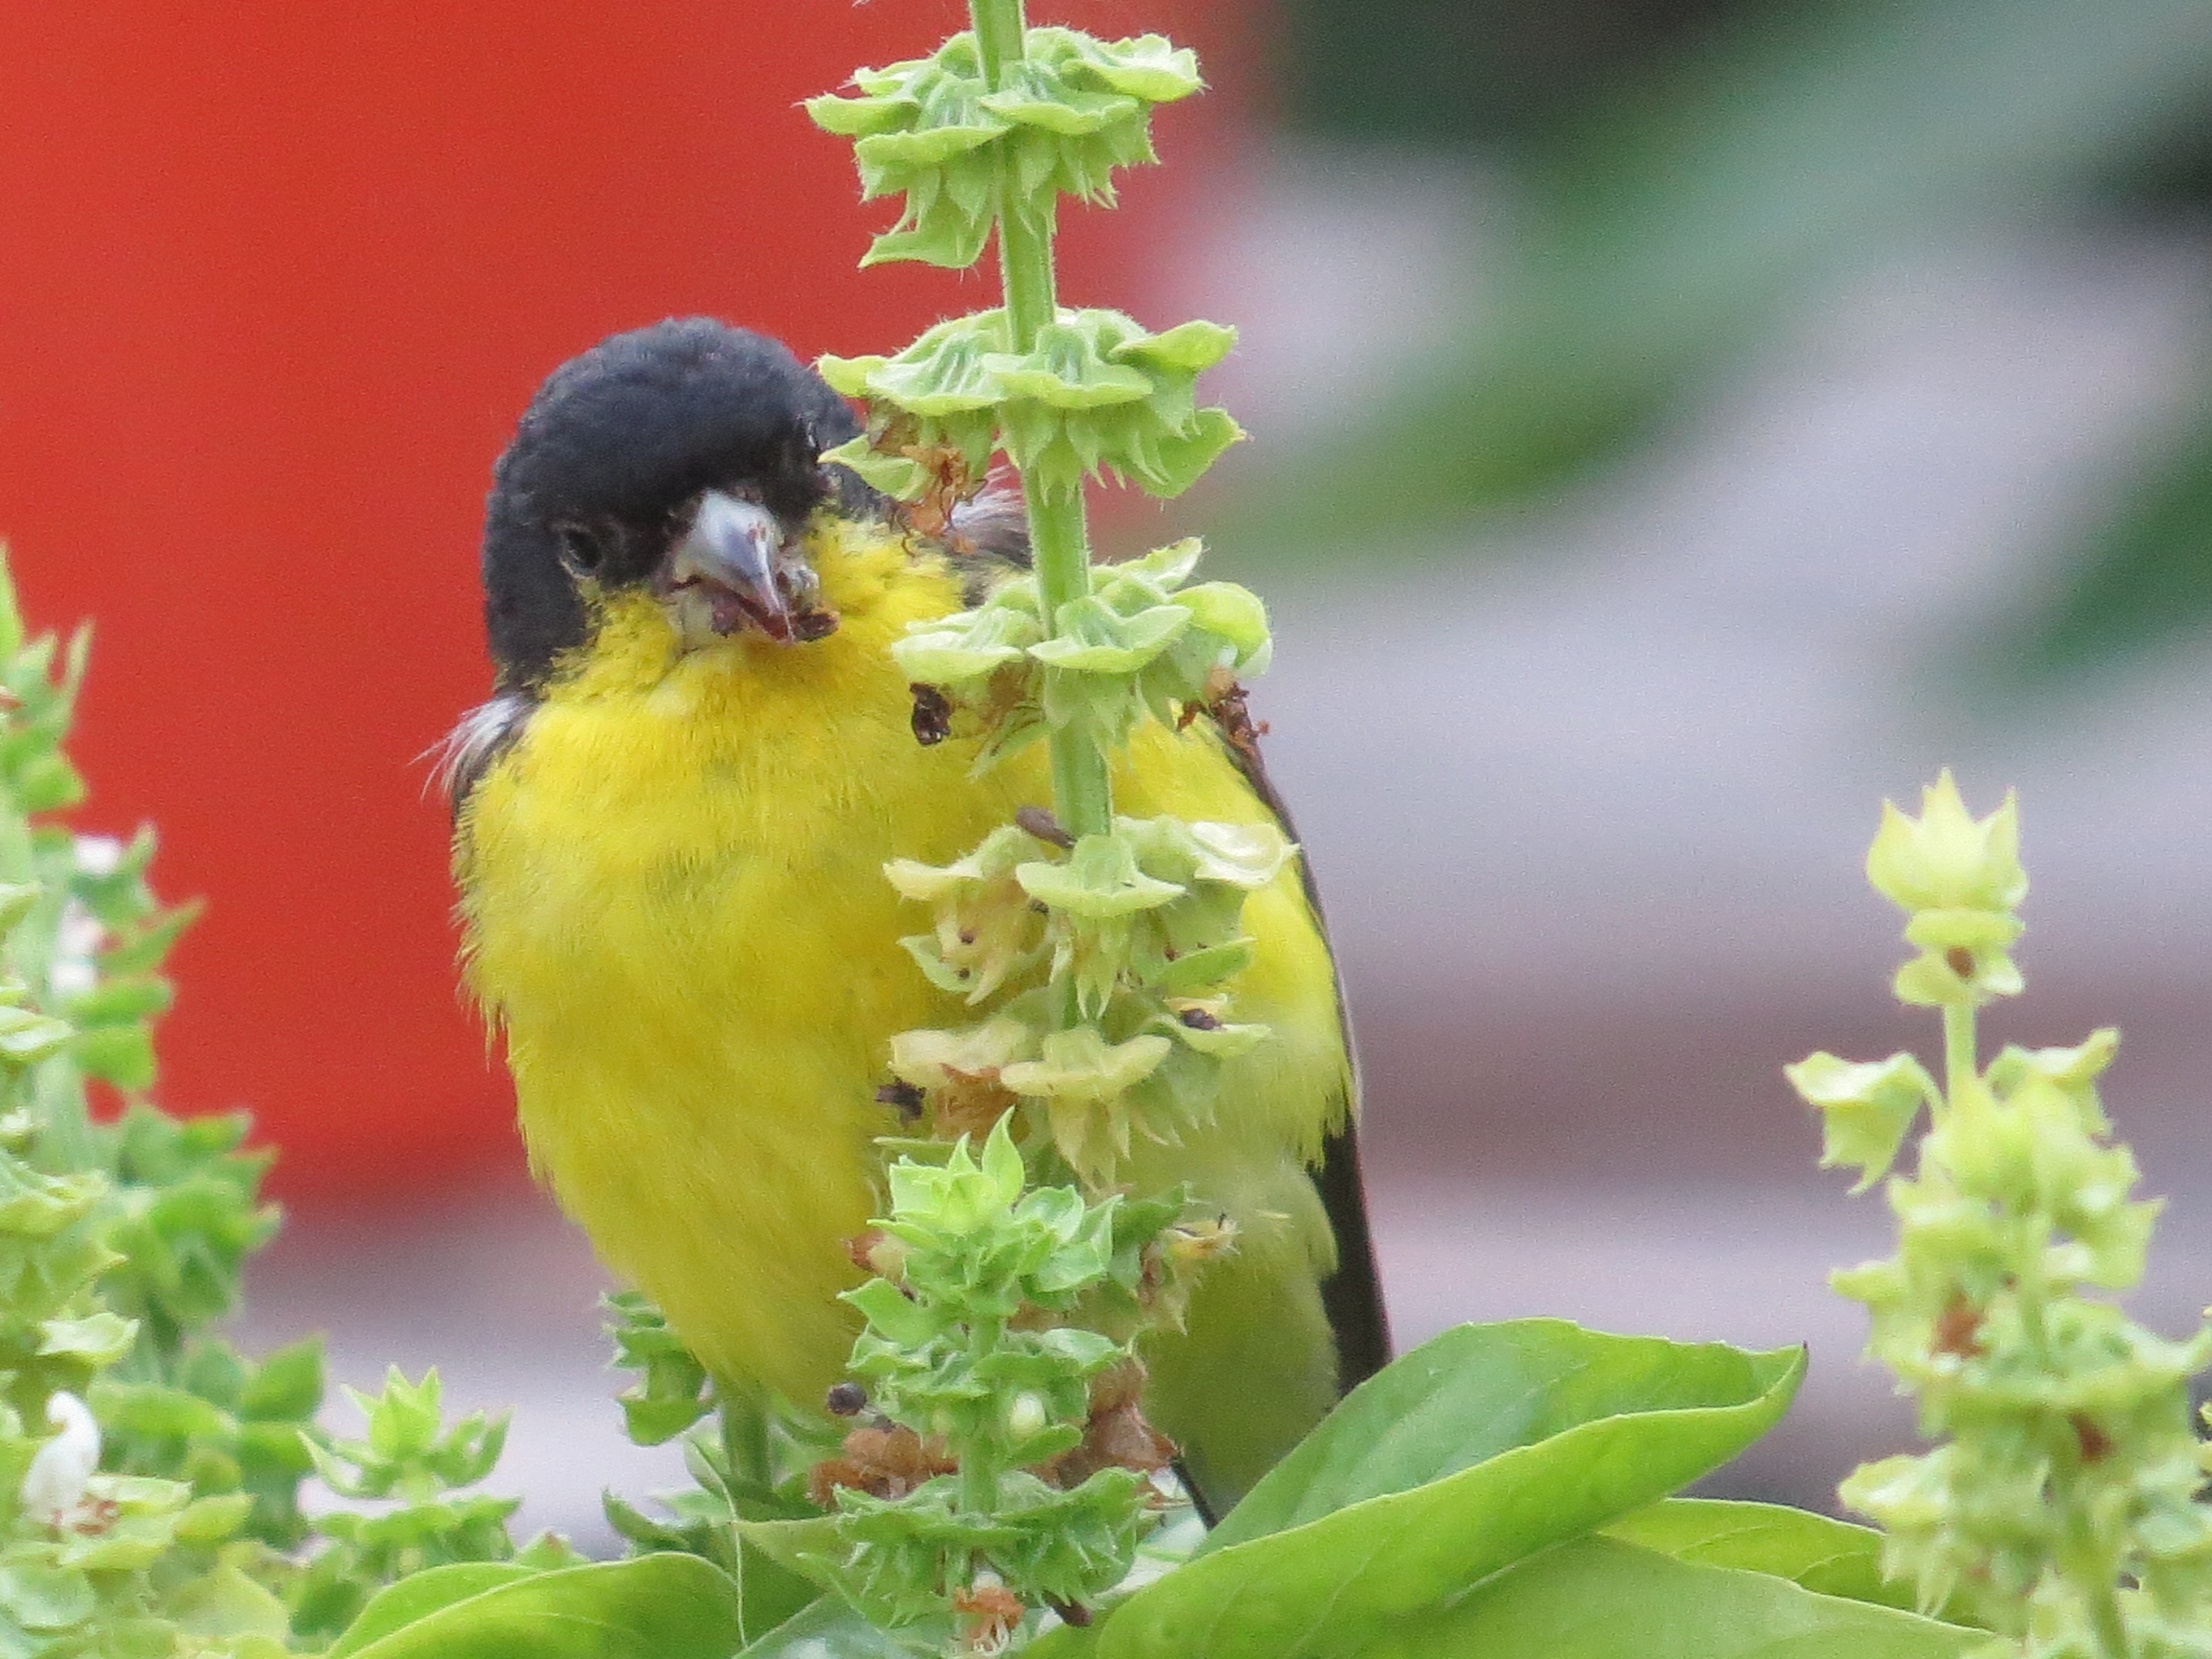 Lesser Goldfinch eating basil